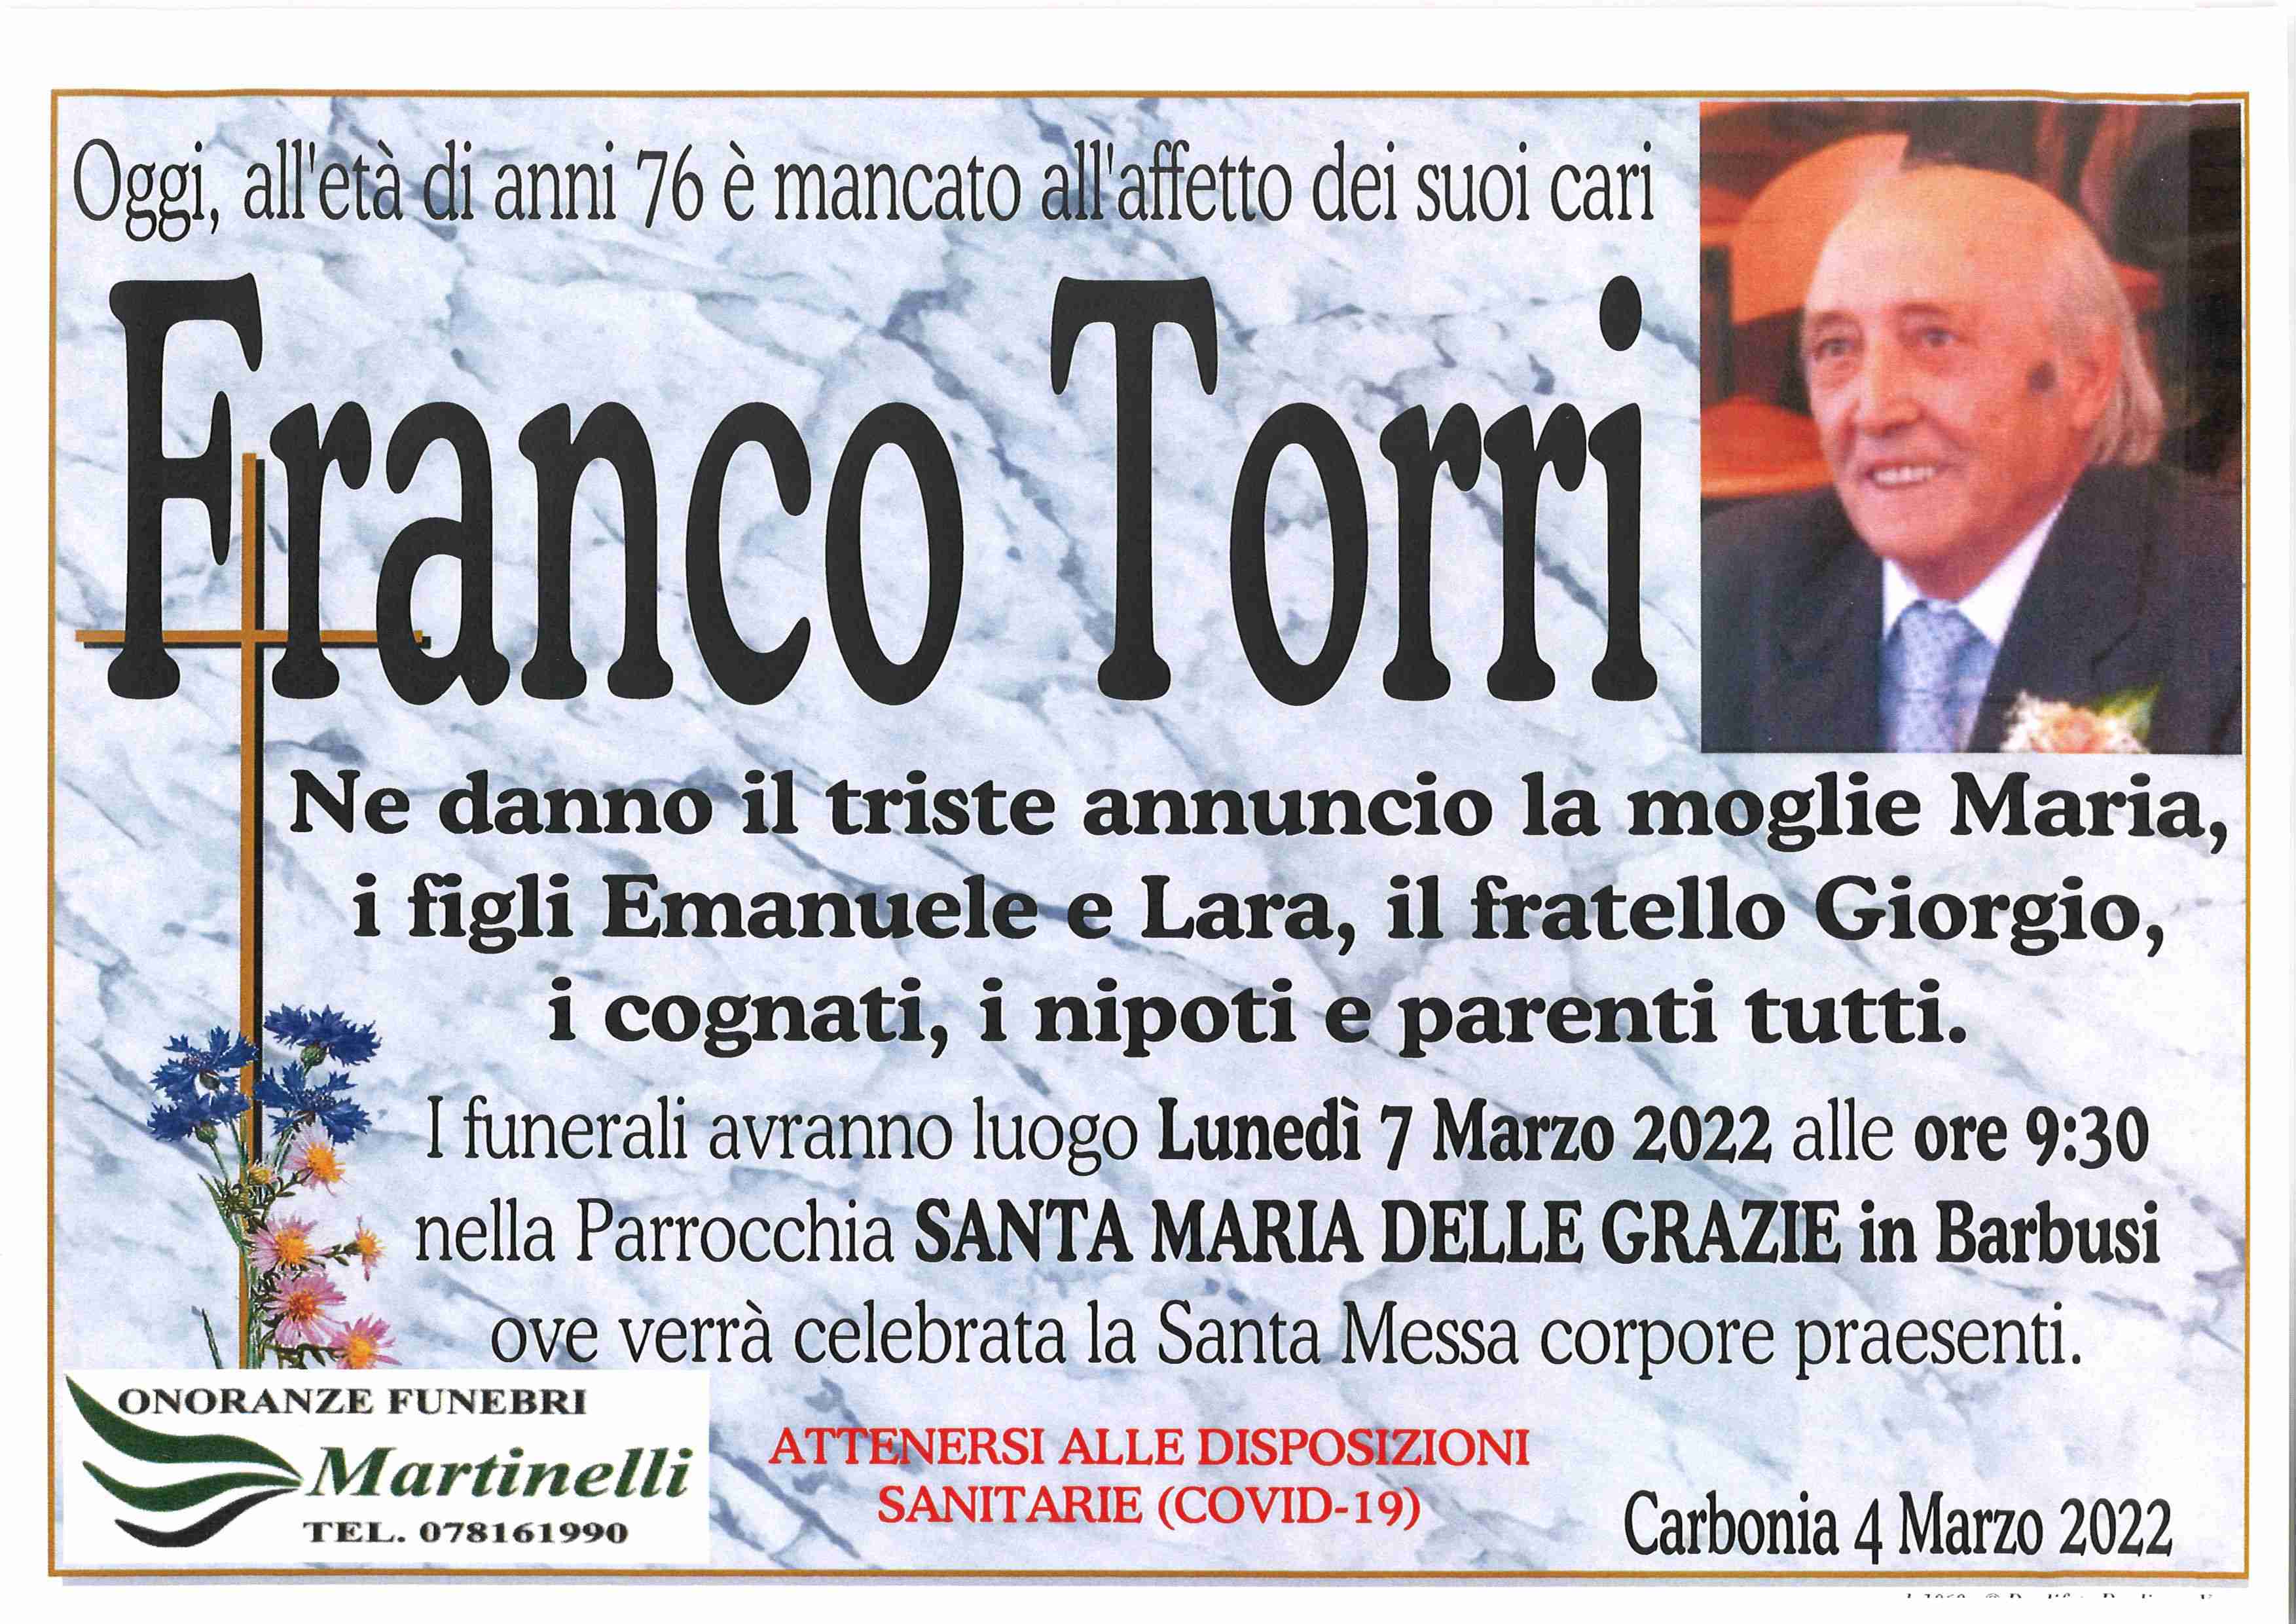 Franco Torri